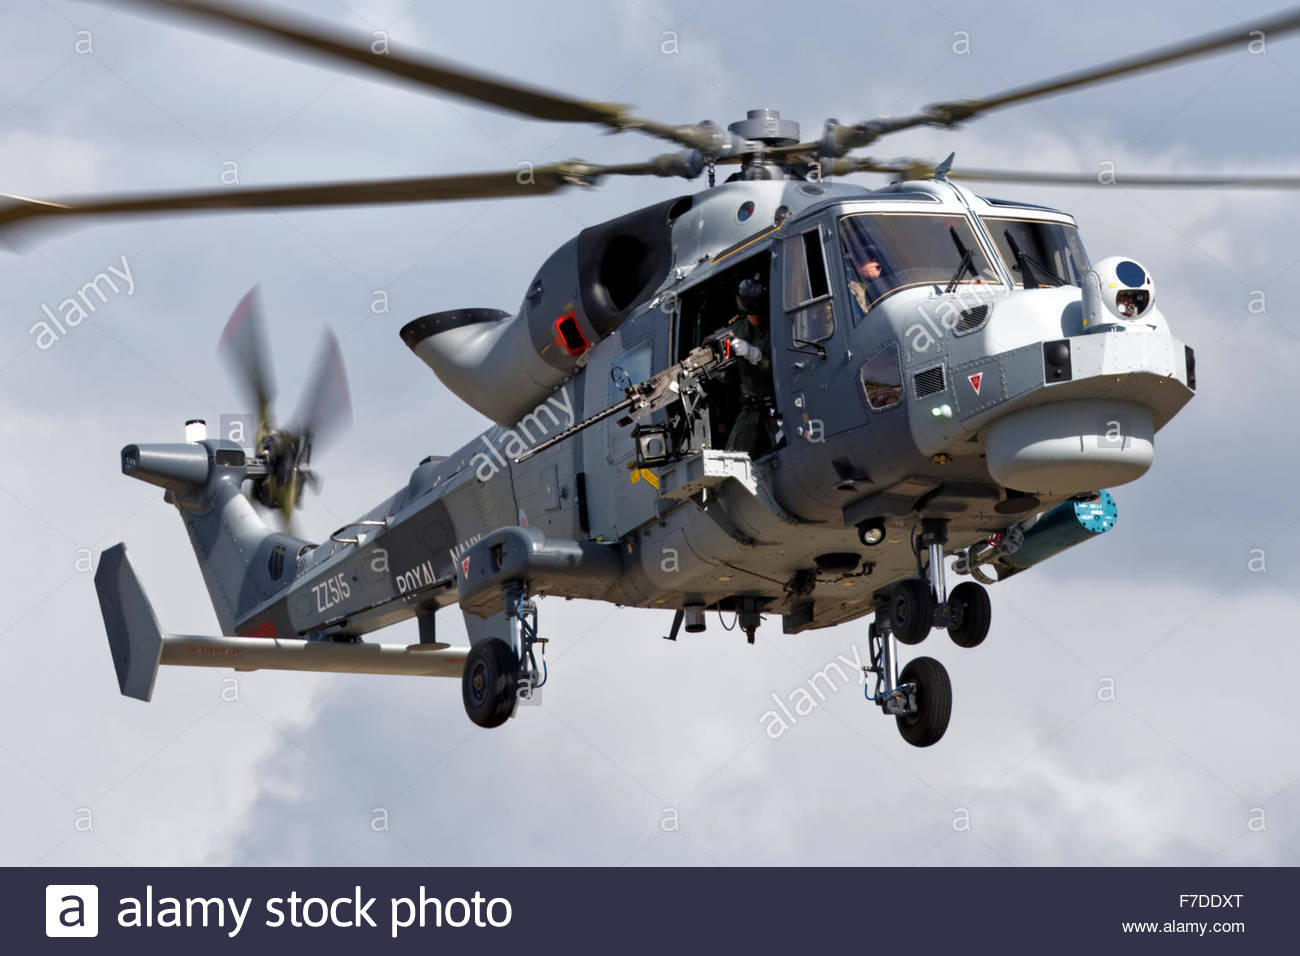 agustawestland-aw159-wildcat-hma2-zz515-maritime-attack-helicopter-F7DDXT.jpg